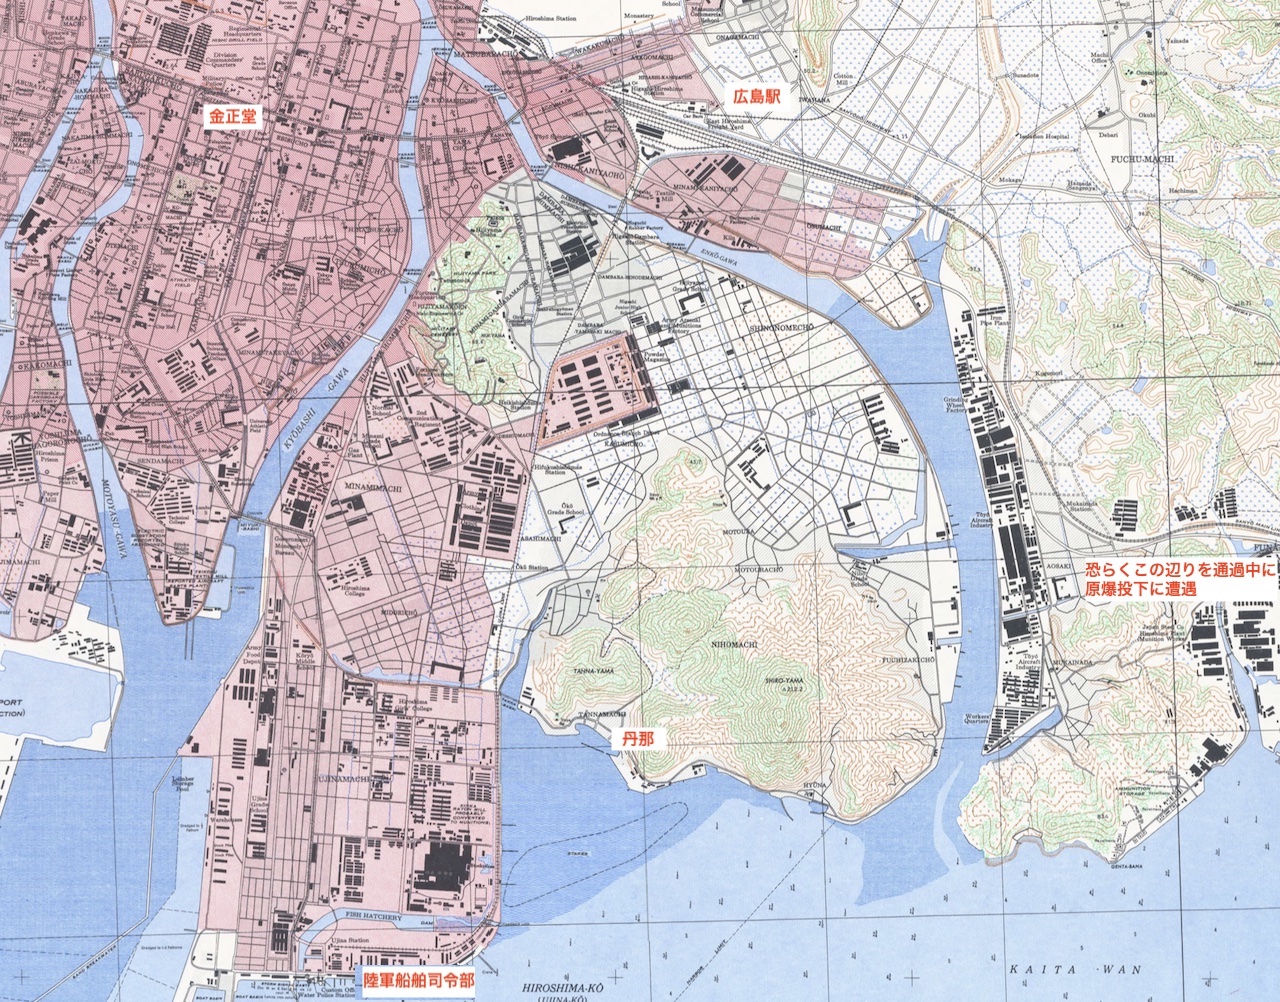 『Hiroshima City Map 1945』の一部に追記